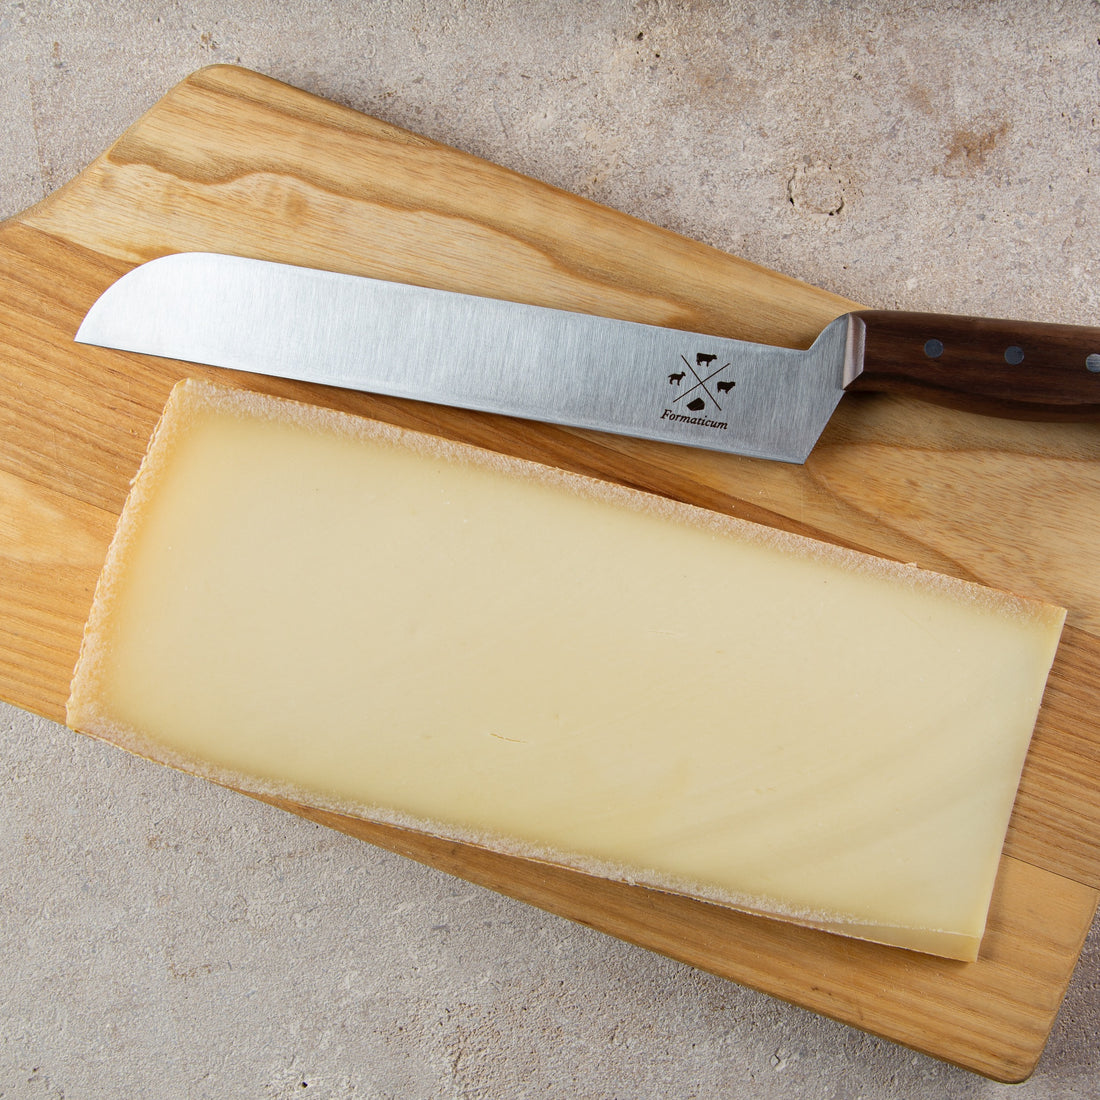 Cheese Knife Yellow